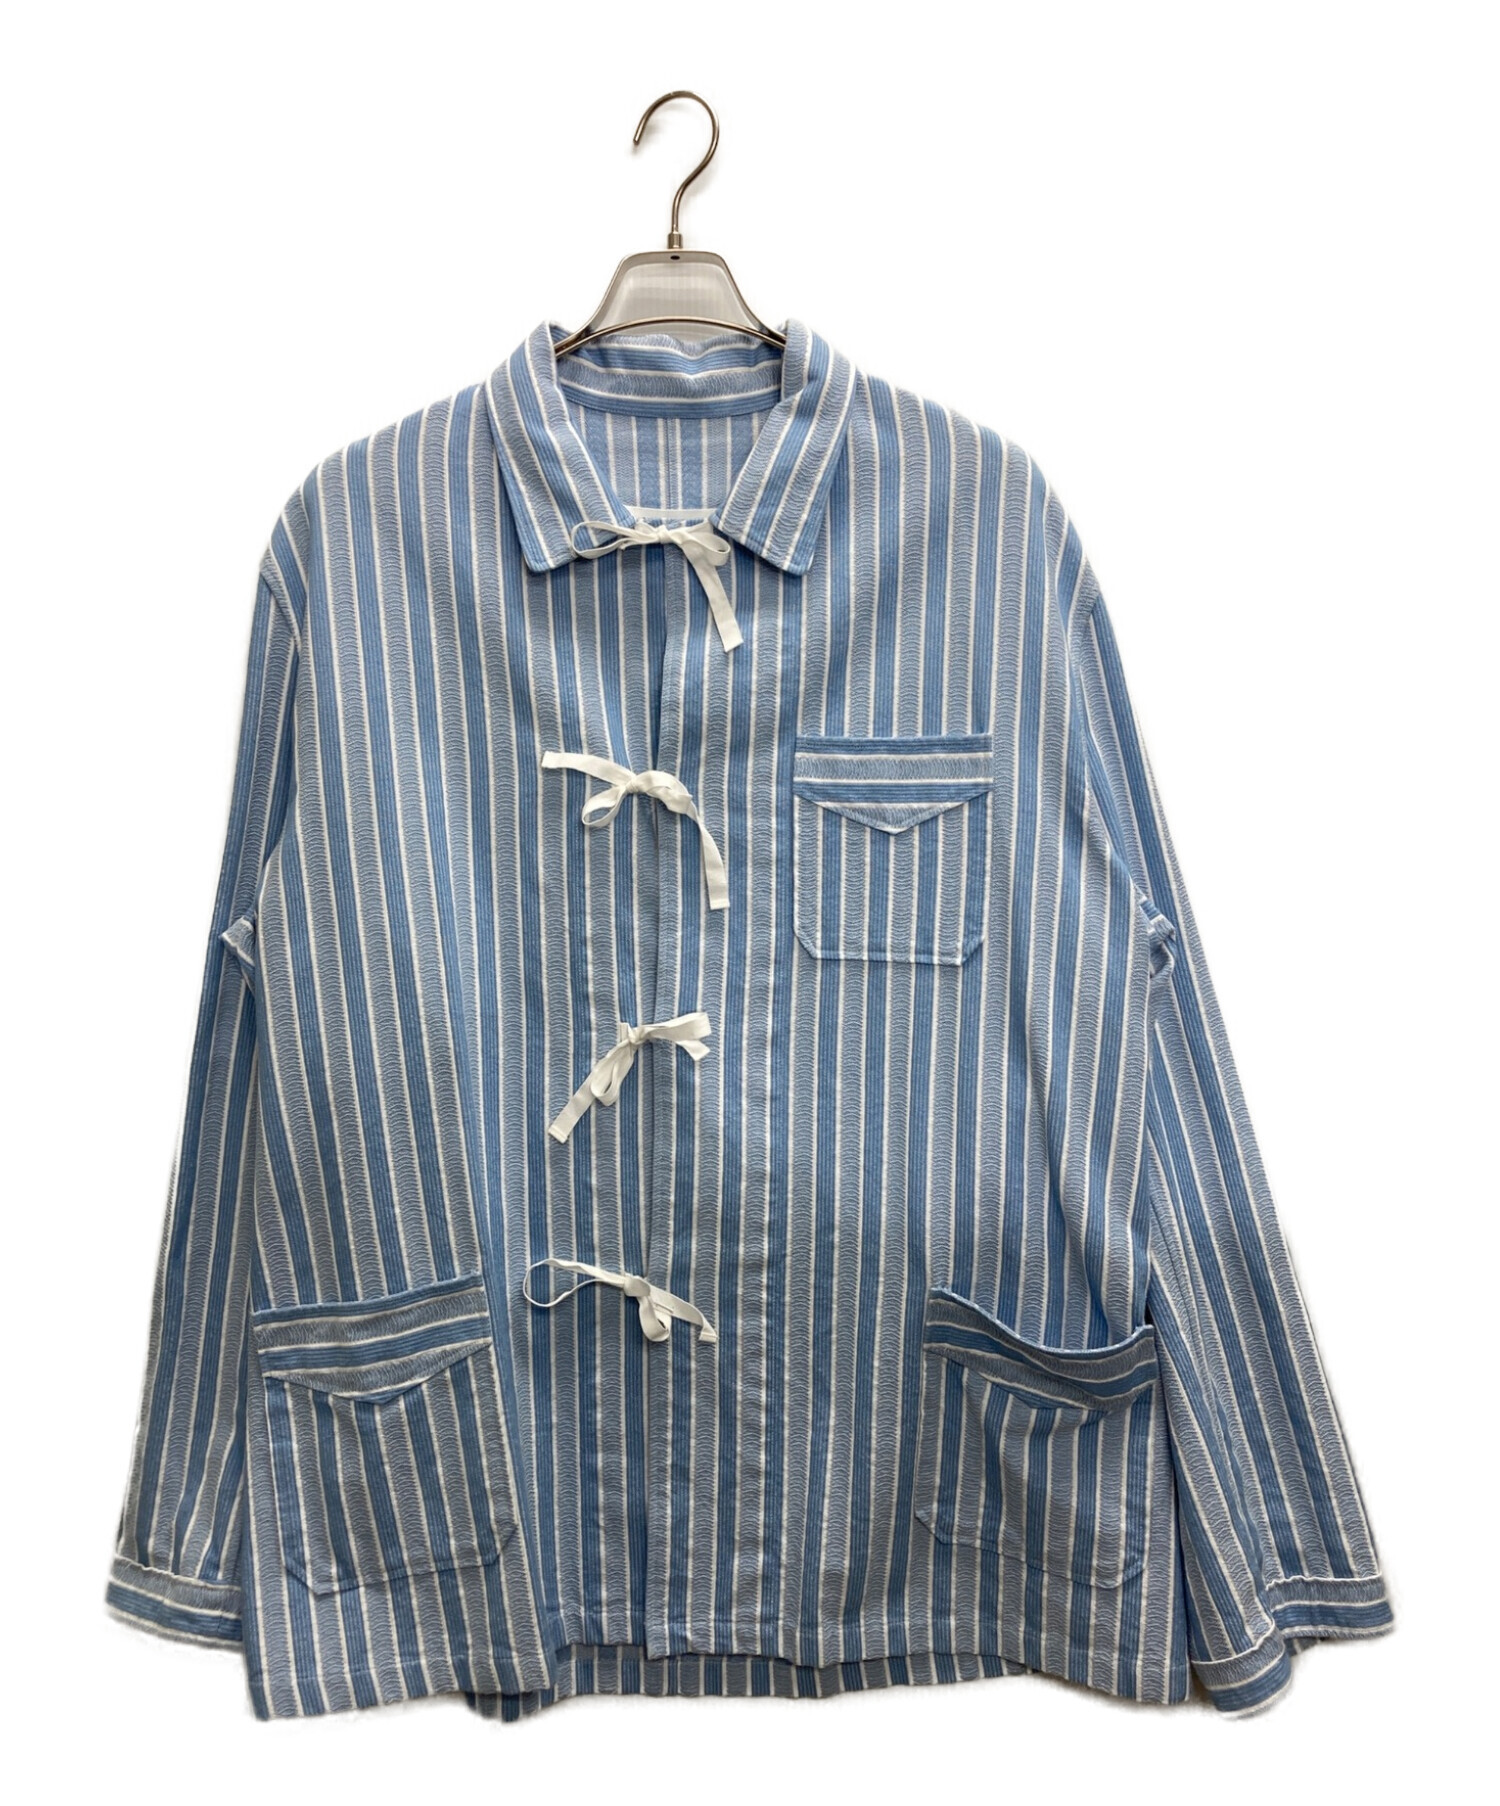 Maison Margiela (メゾンマルジェラ) 22SS STRIPE SHIRTS JACKET/ストライプシャツジャケット ブルー  サイズ:39